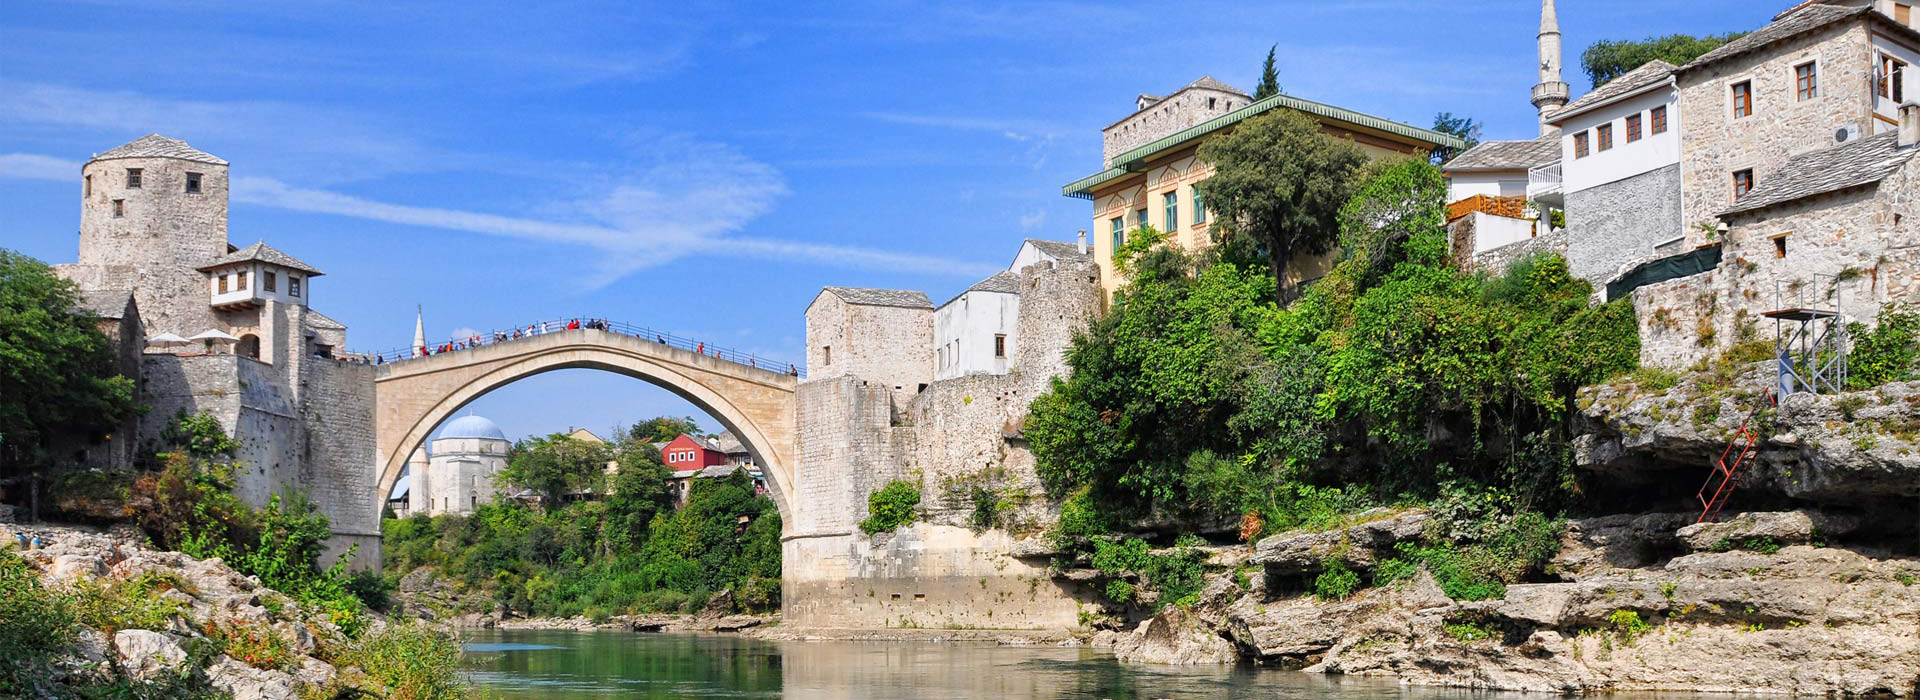 Walking and cultural Balkans discovery trip - Mostar old bridge